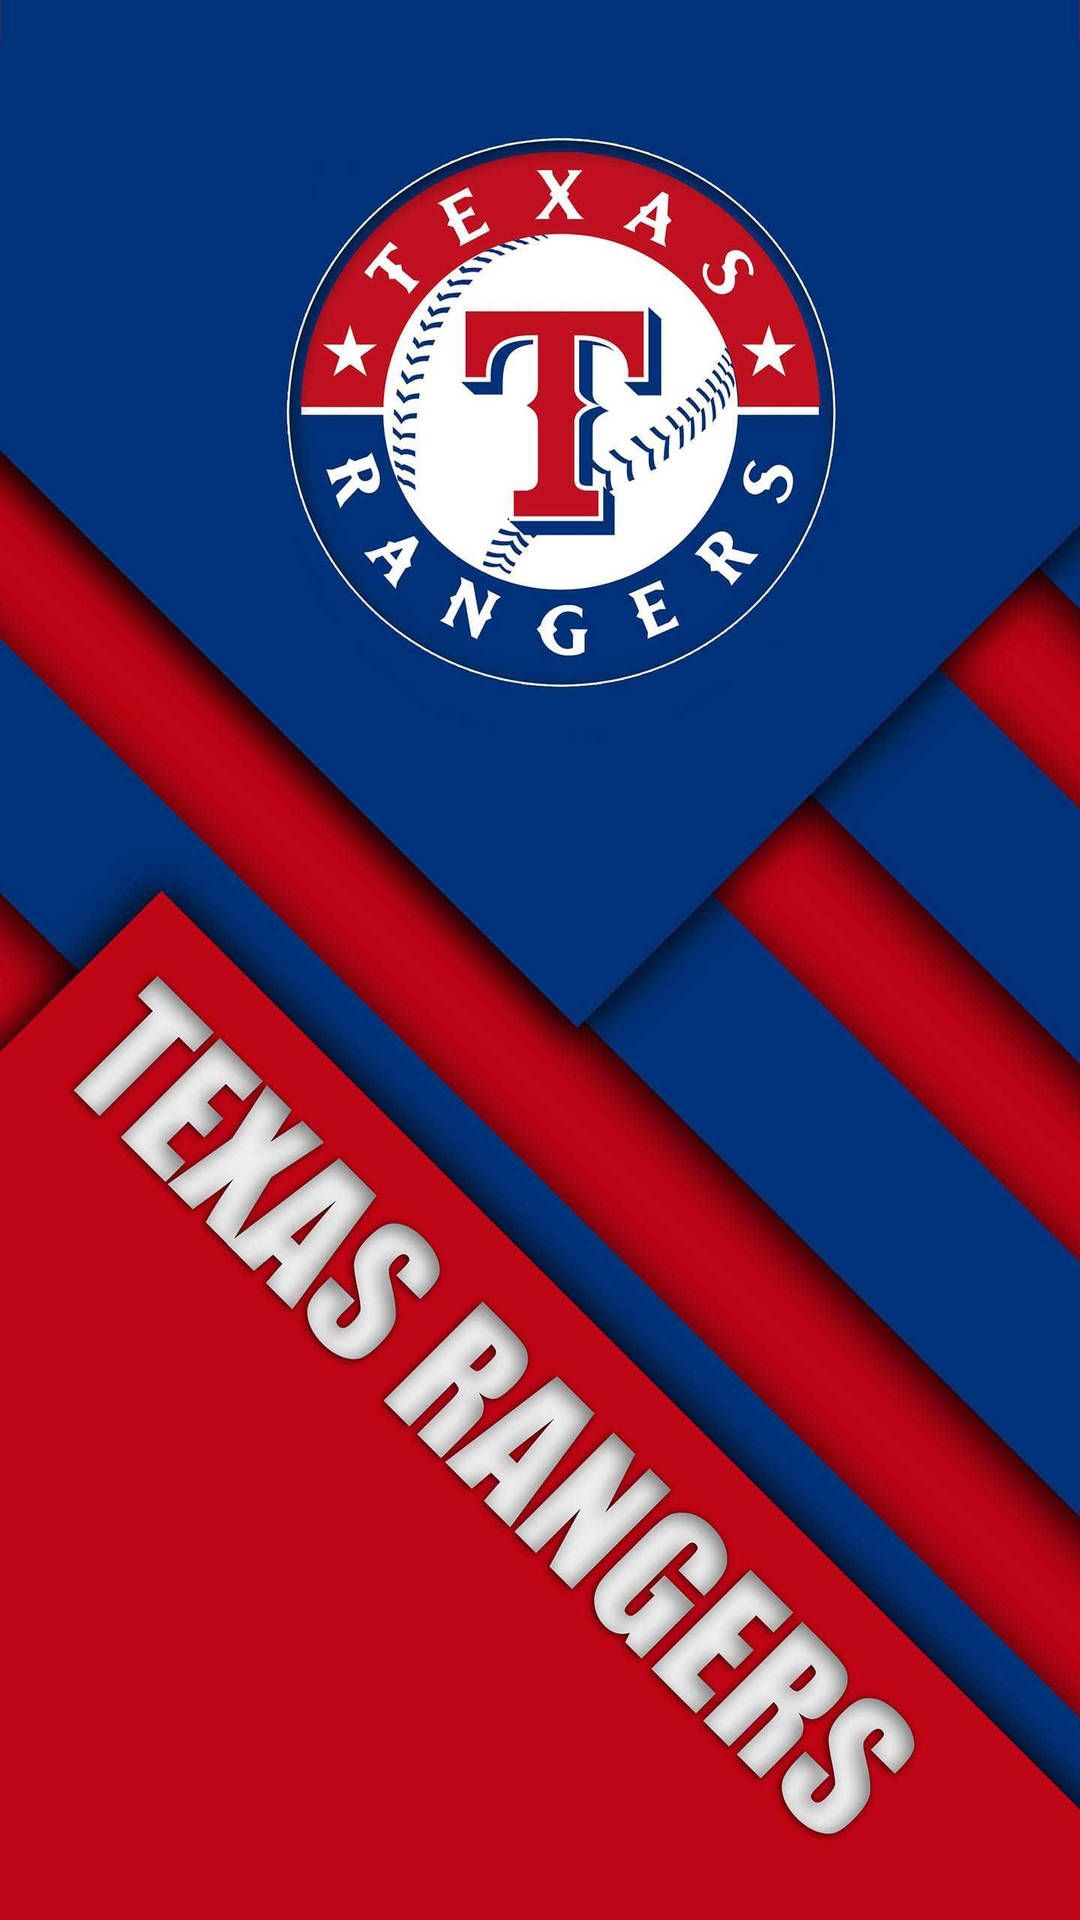 Free Texas Rangers Wallpaper Downloads, Texas Rangers Wallpaper for FREE